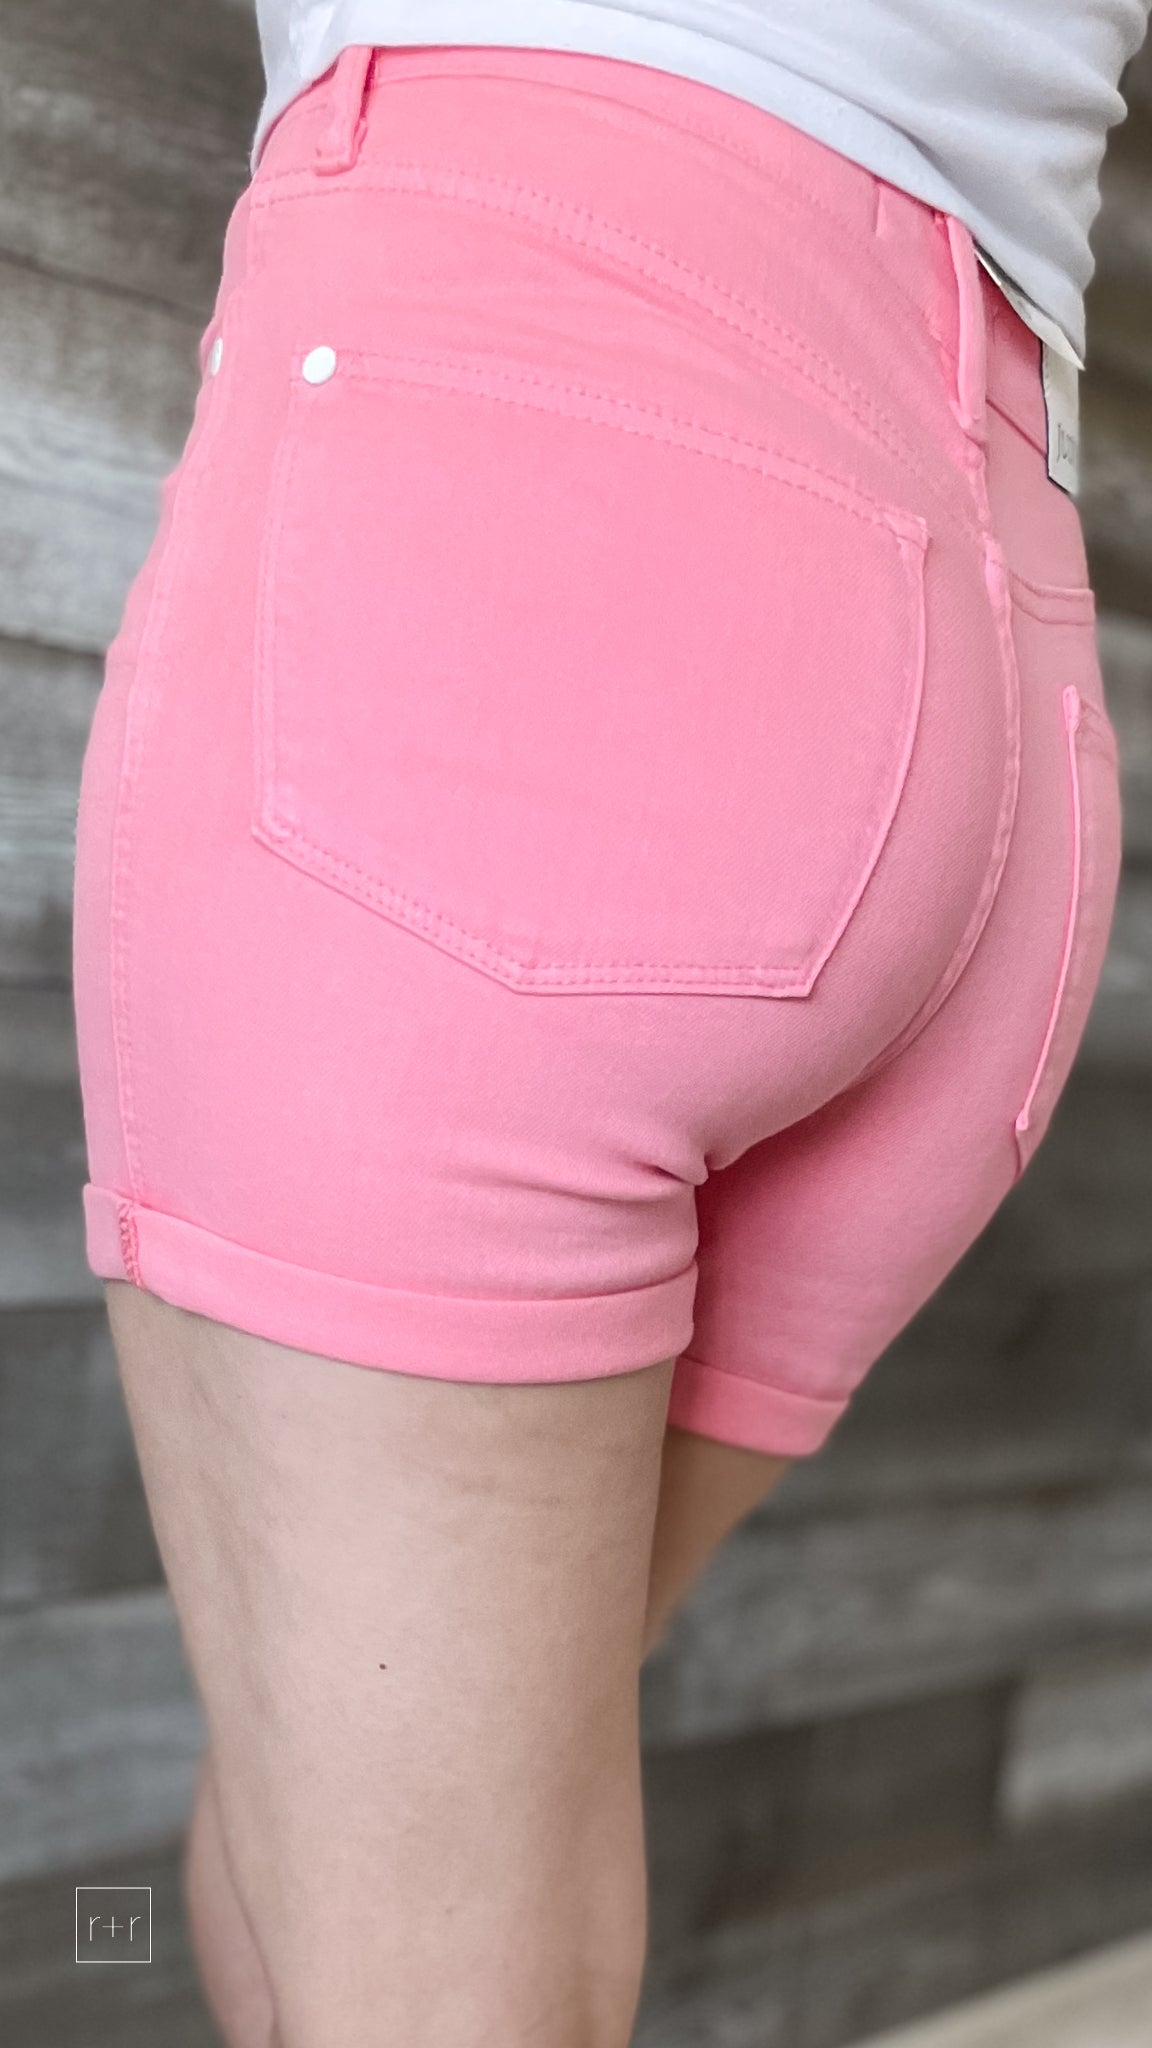 judy blue high waist garment dyed pink cuffed shorts tummy control top JB150285REG PK